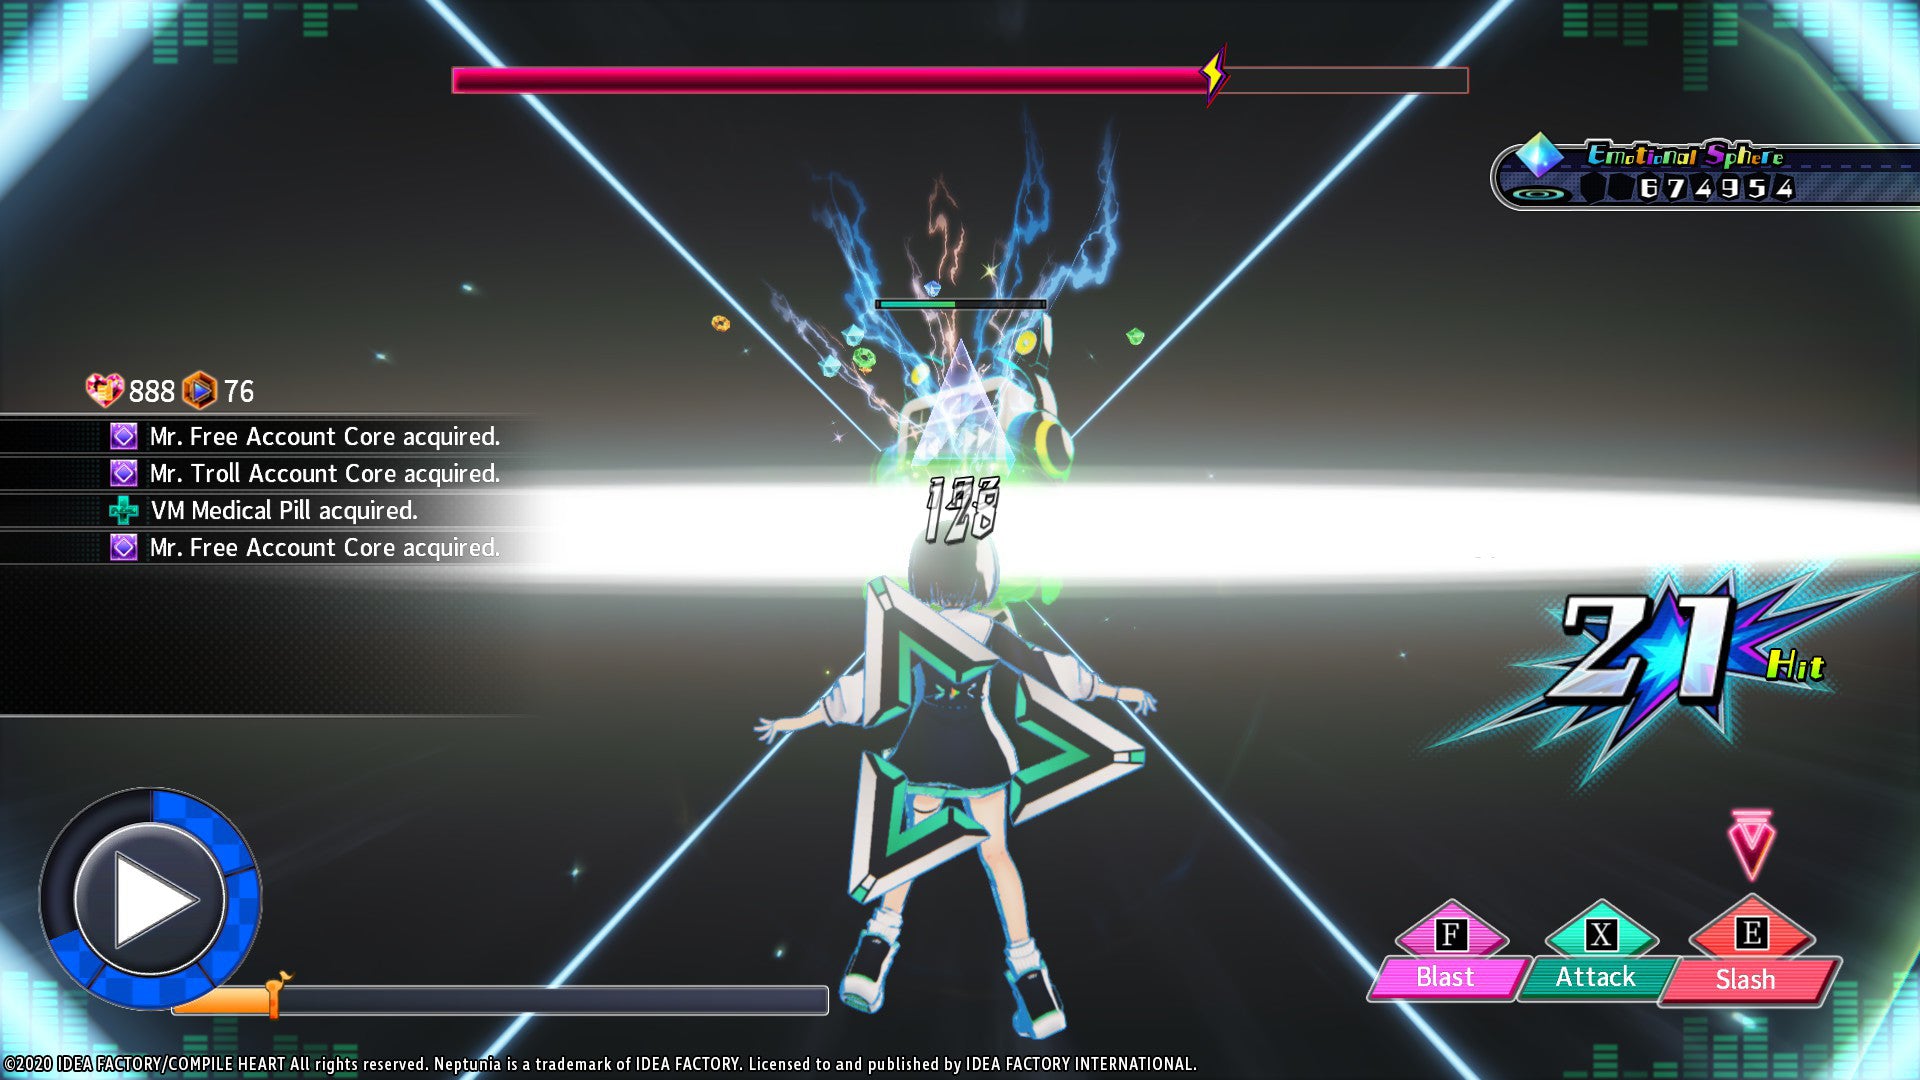 Neptunia Virtual Stars - Towa Kiseki (Character & Story) DLC